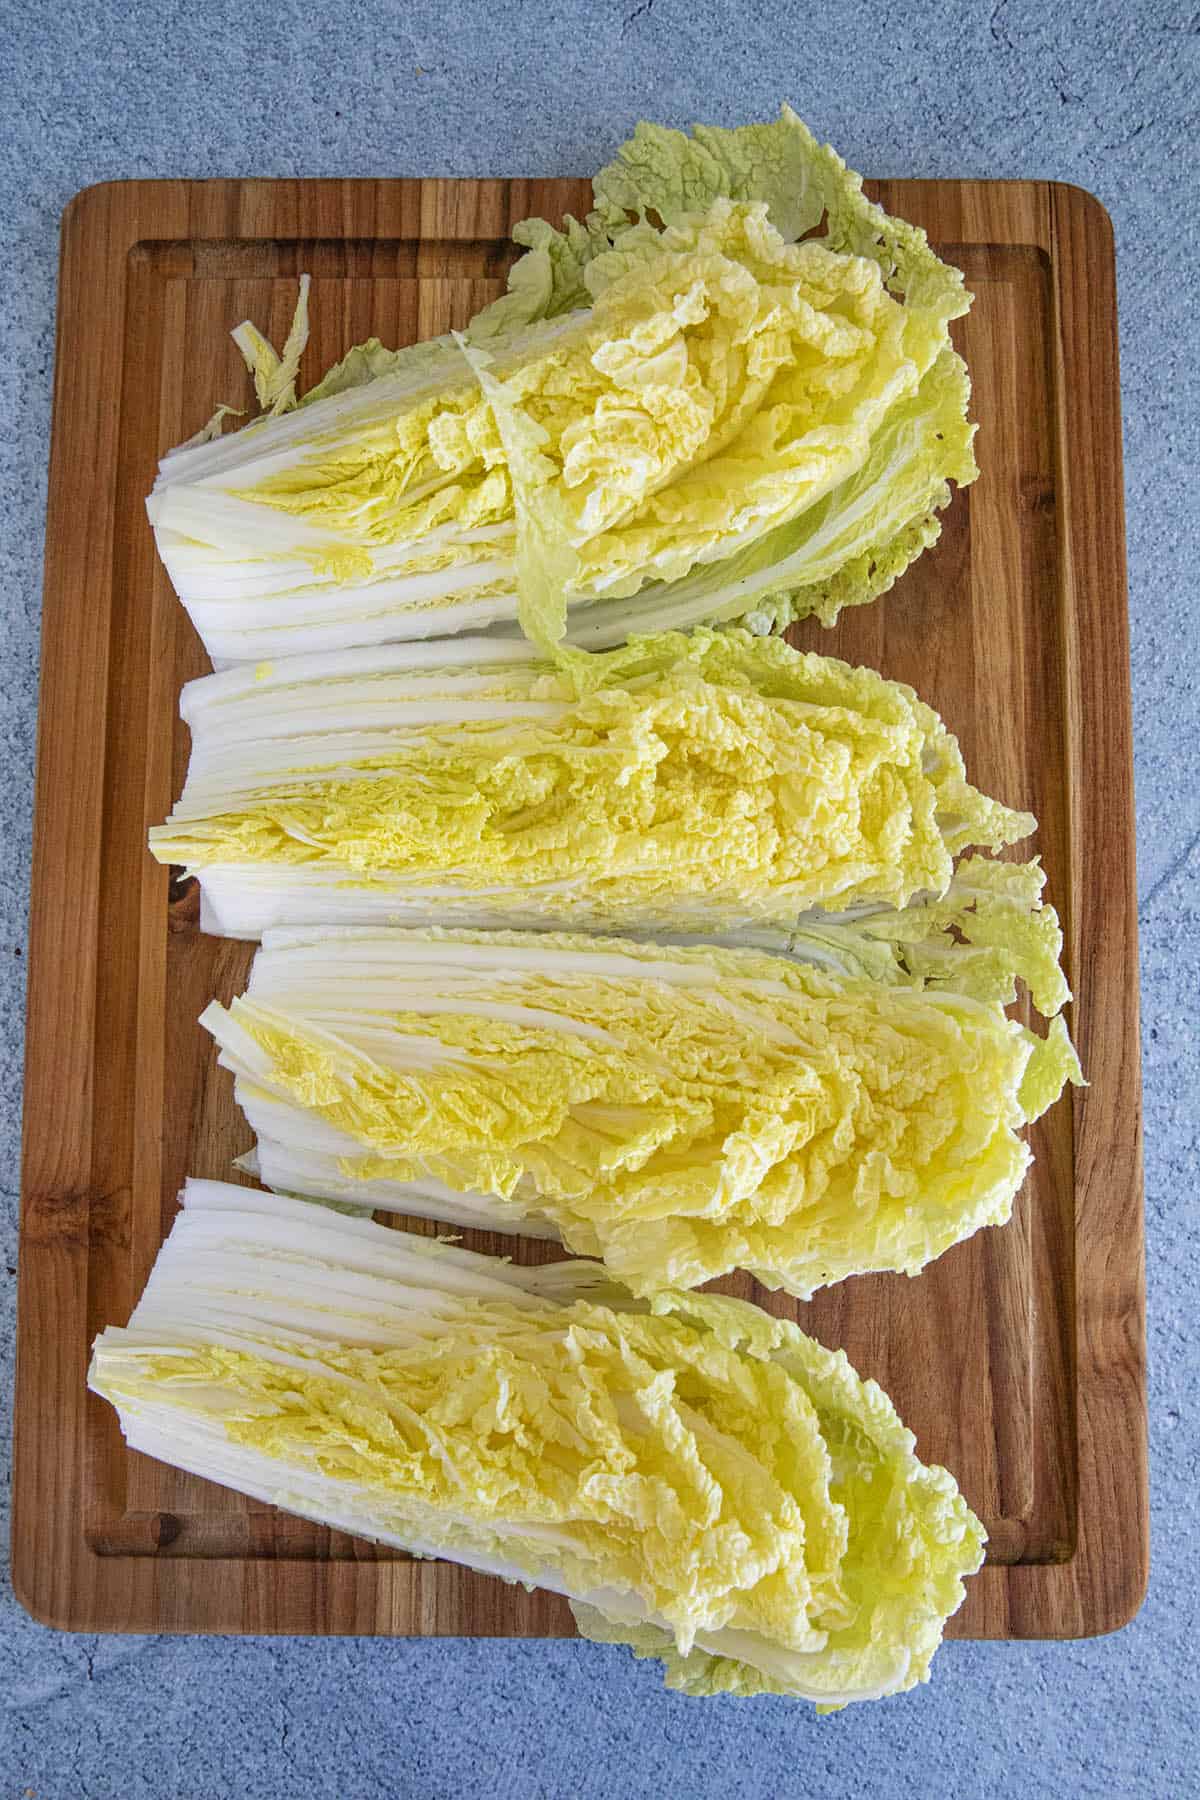 Cut the napa cabbage into quarters